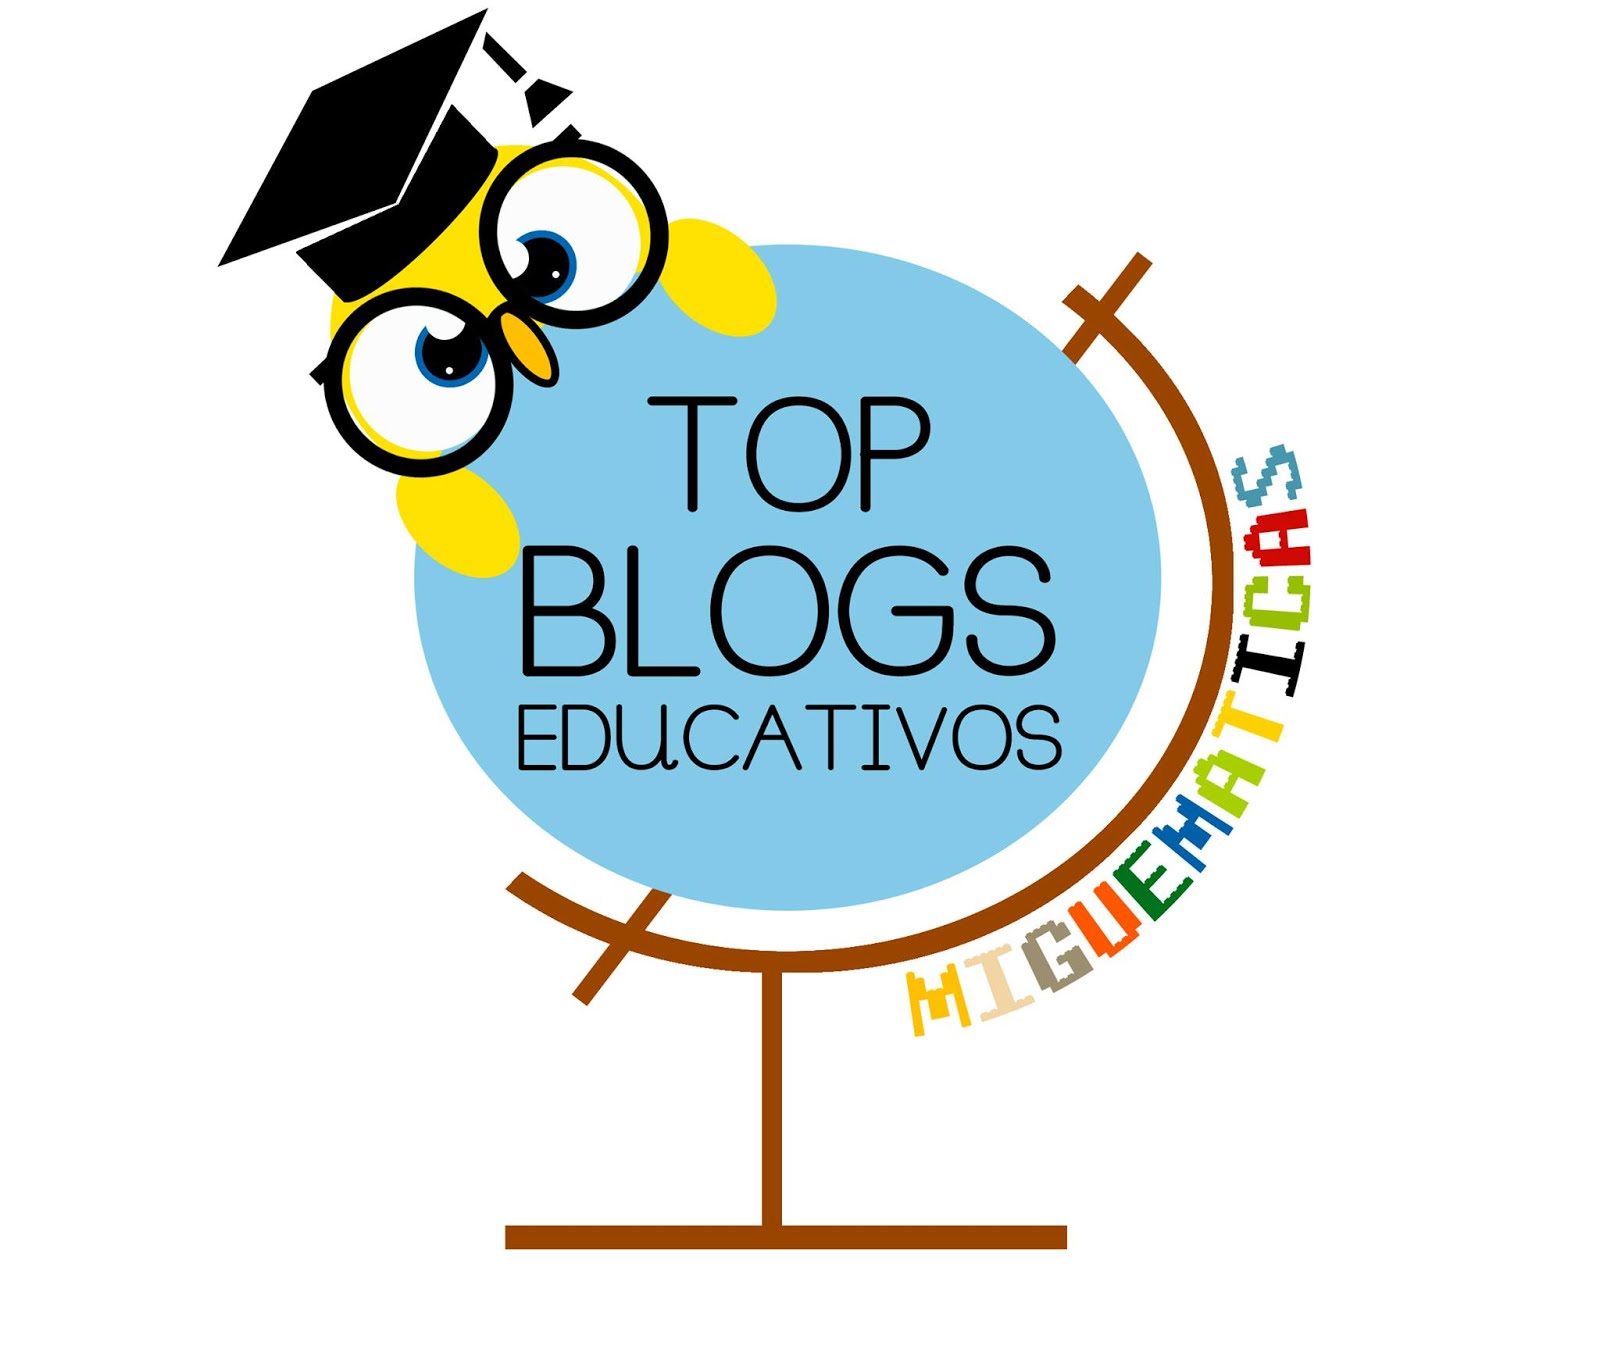 Top Blogs Educativos